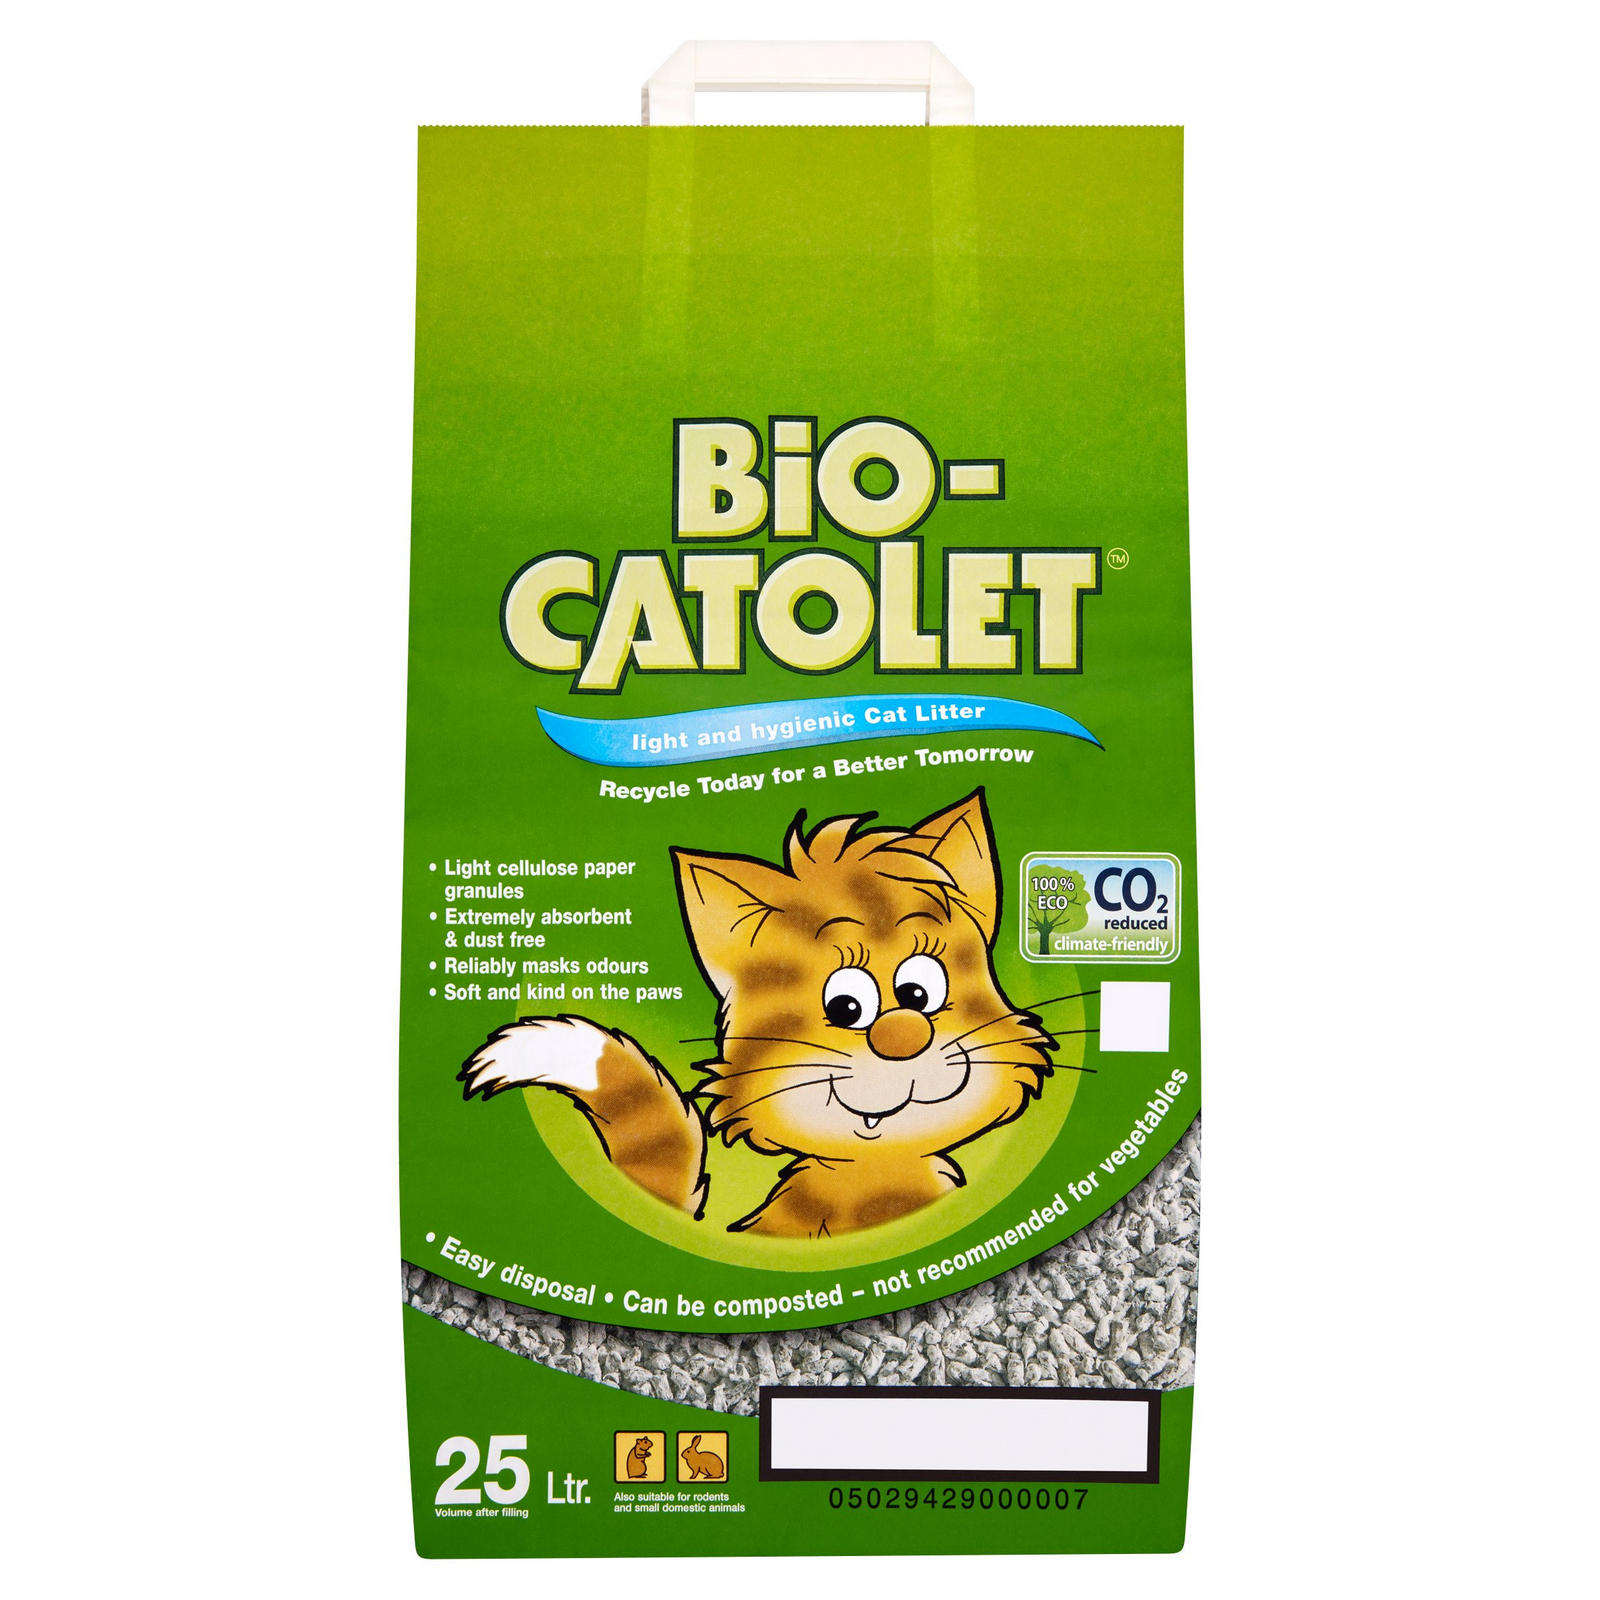 BioCatolet Light and Hygiene Cat Litter 25 Ltr Pet Food Iceland Foods